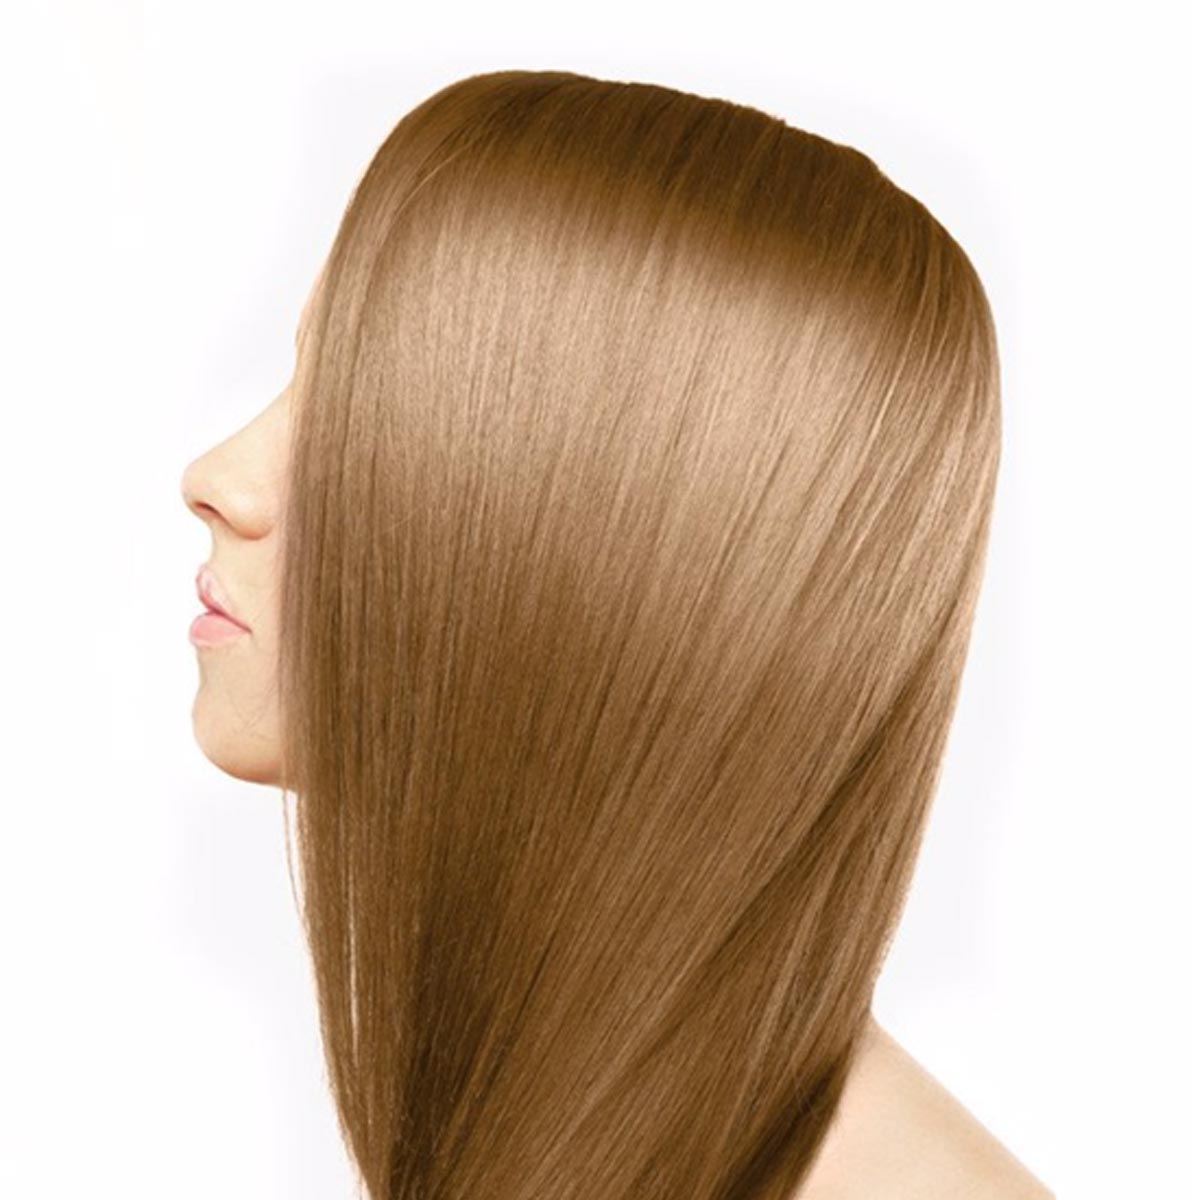 Alternate image of Light Blonde Henna Hair Color